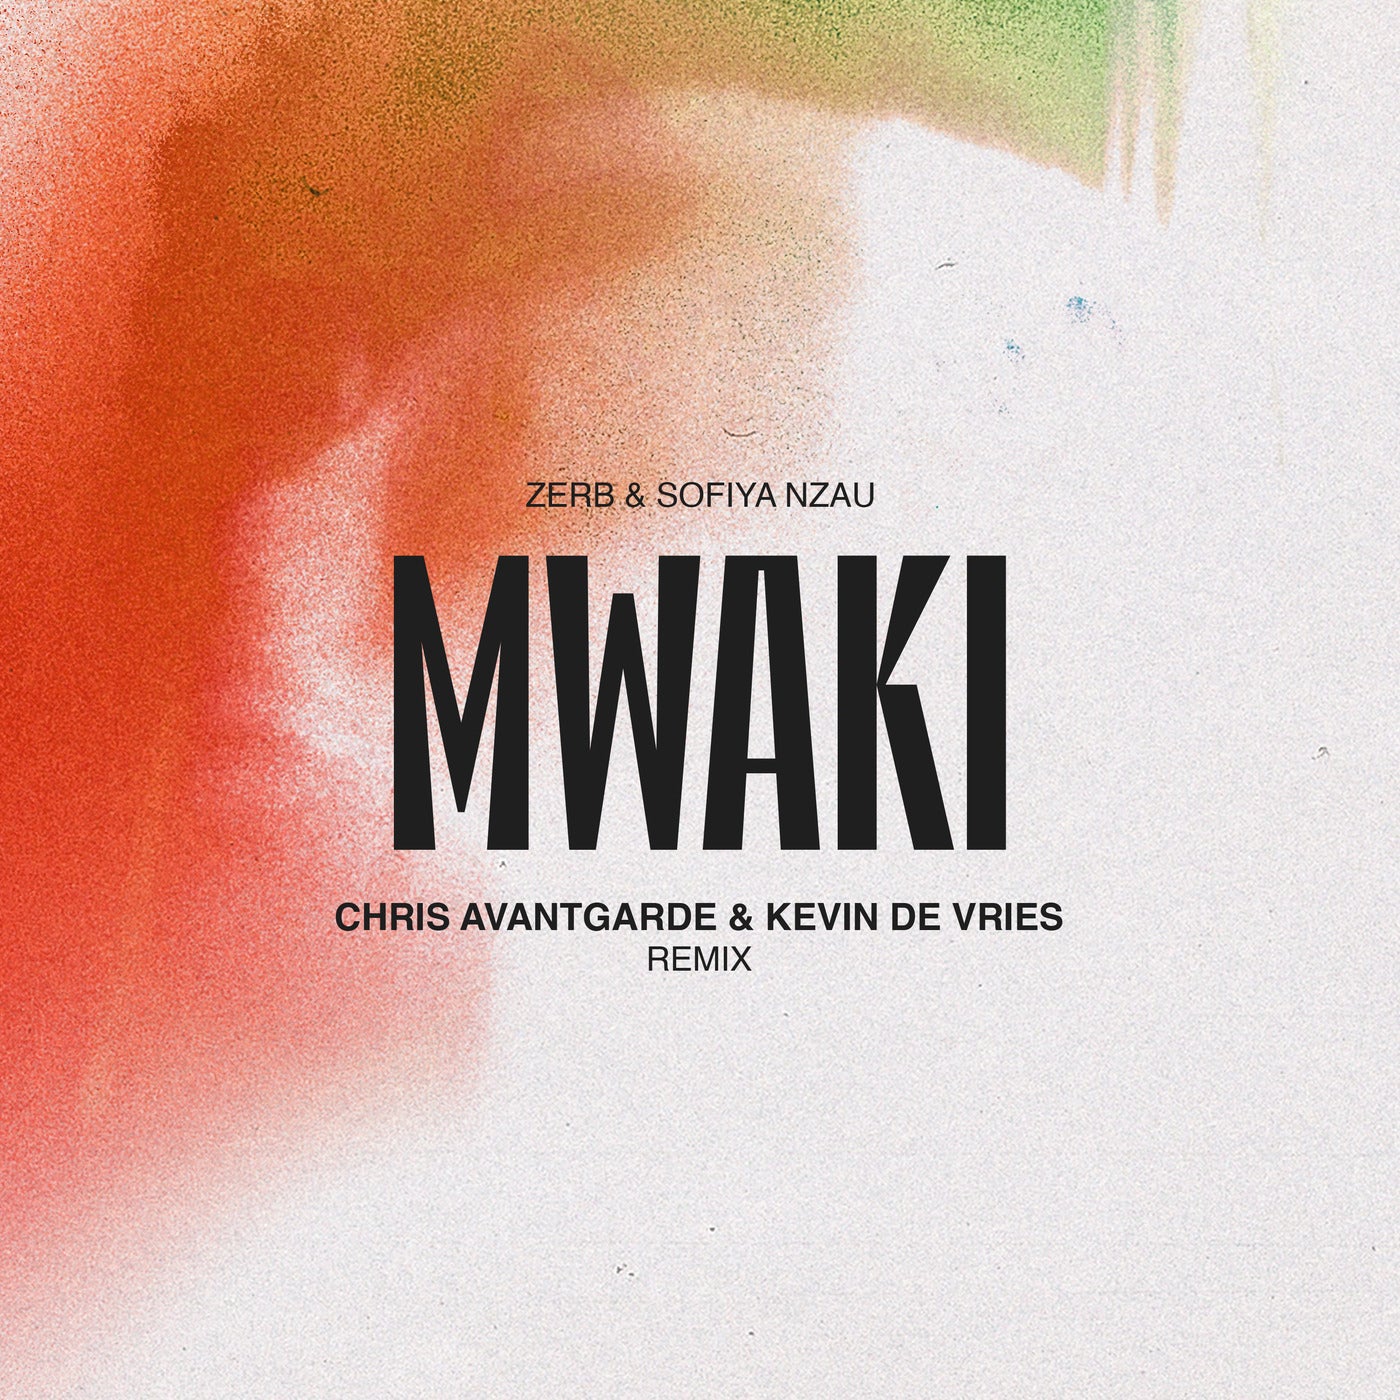 Zerb - Mwaki feat. Sofiya Nzau (Chris Avantgarde & Kevin de Vries Remix Extended)